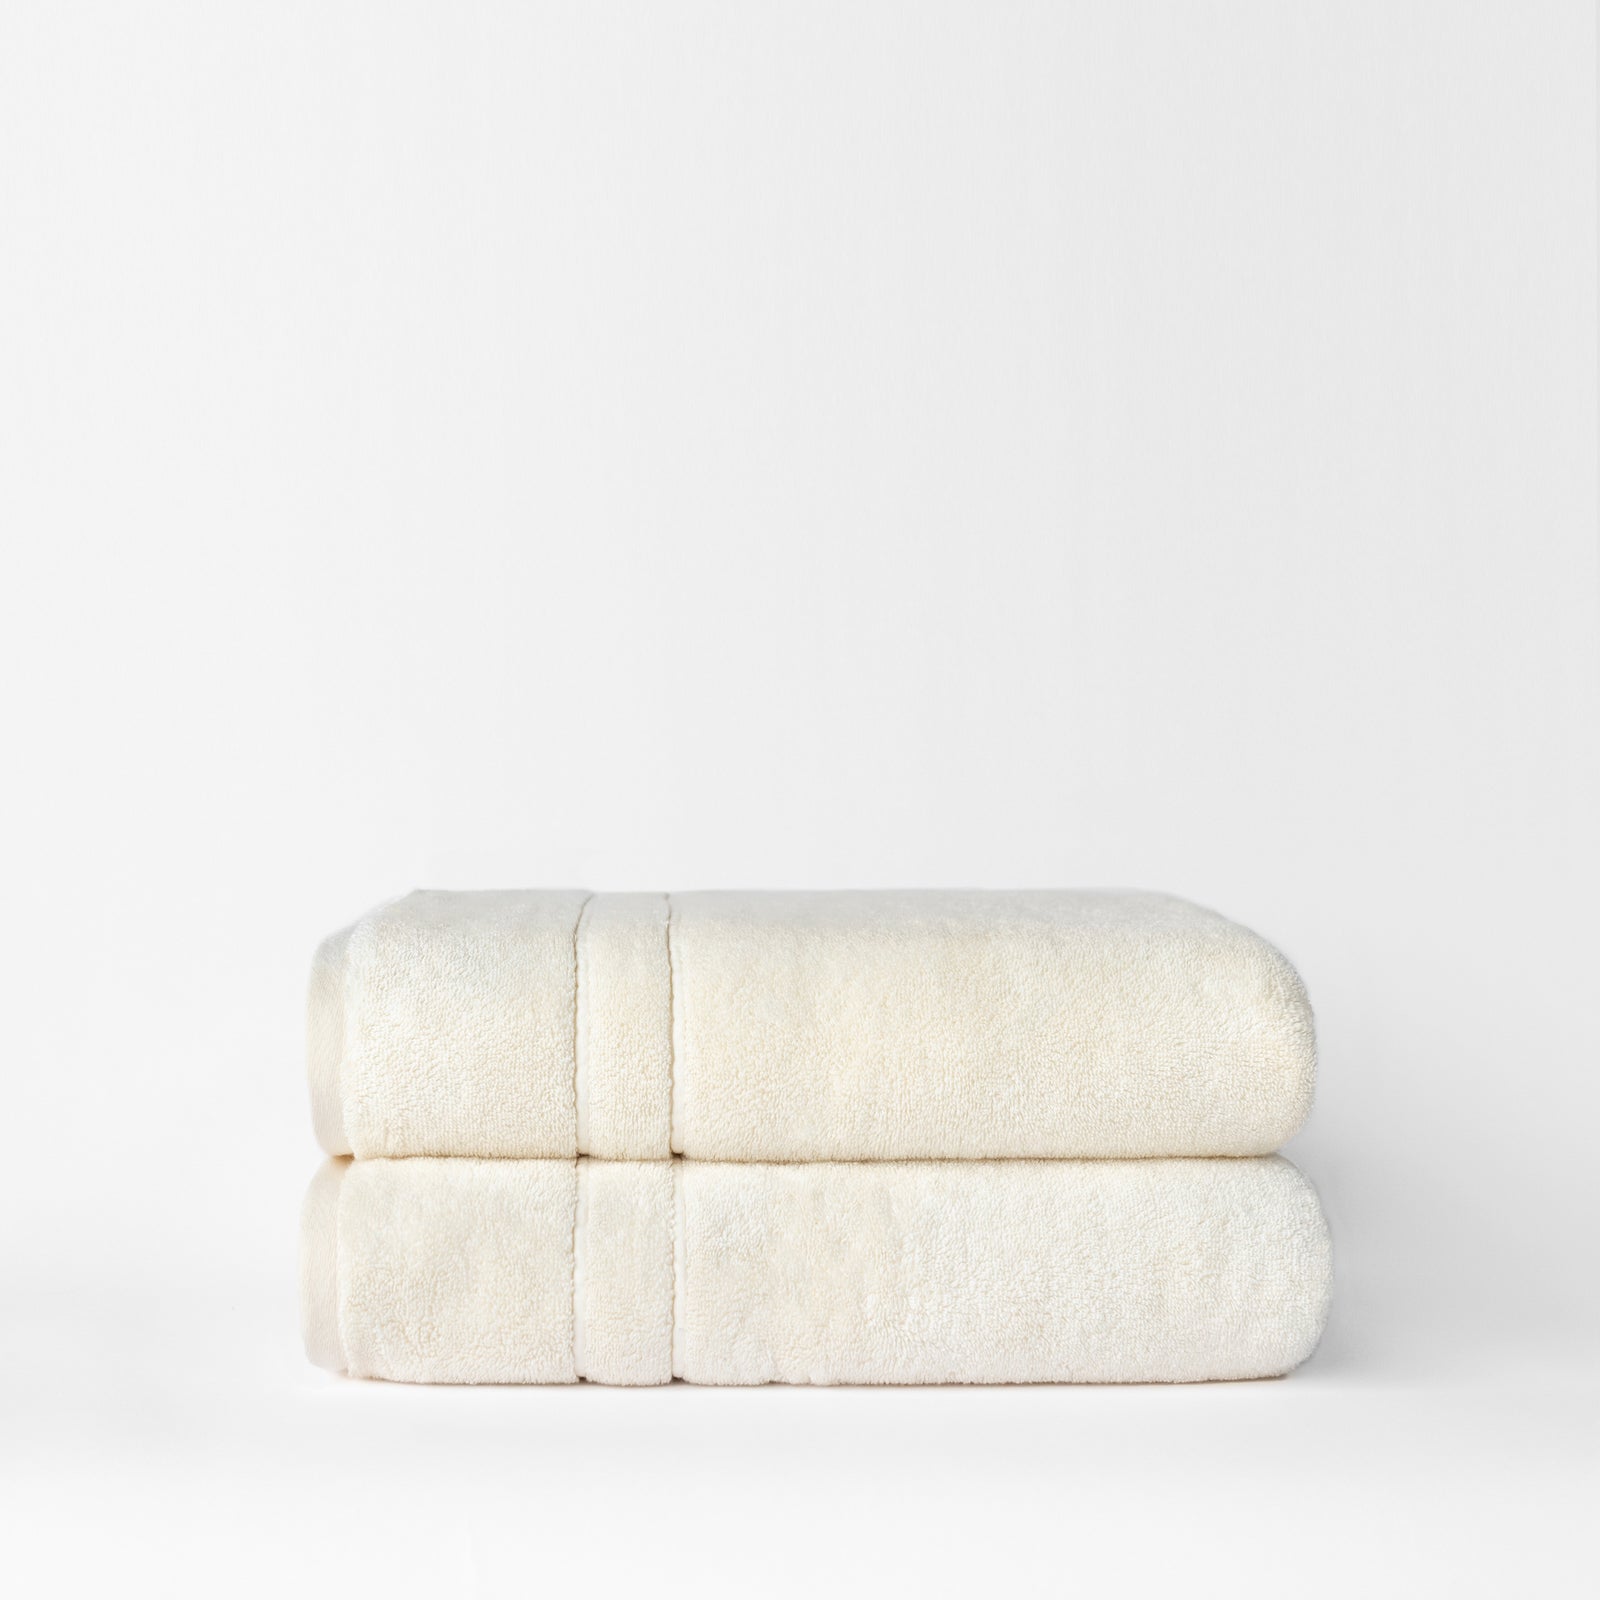 Premium Plush Bath Towels in the color Creme. Photo of Complete Premium Plush Bath Bundle taken with white background 